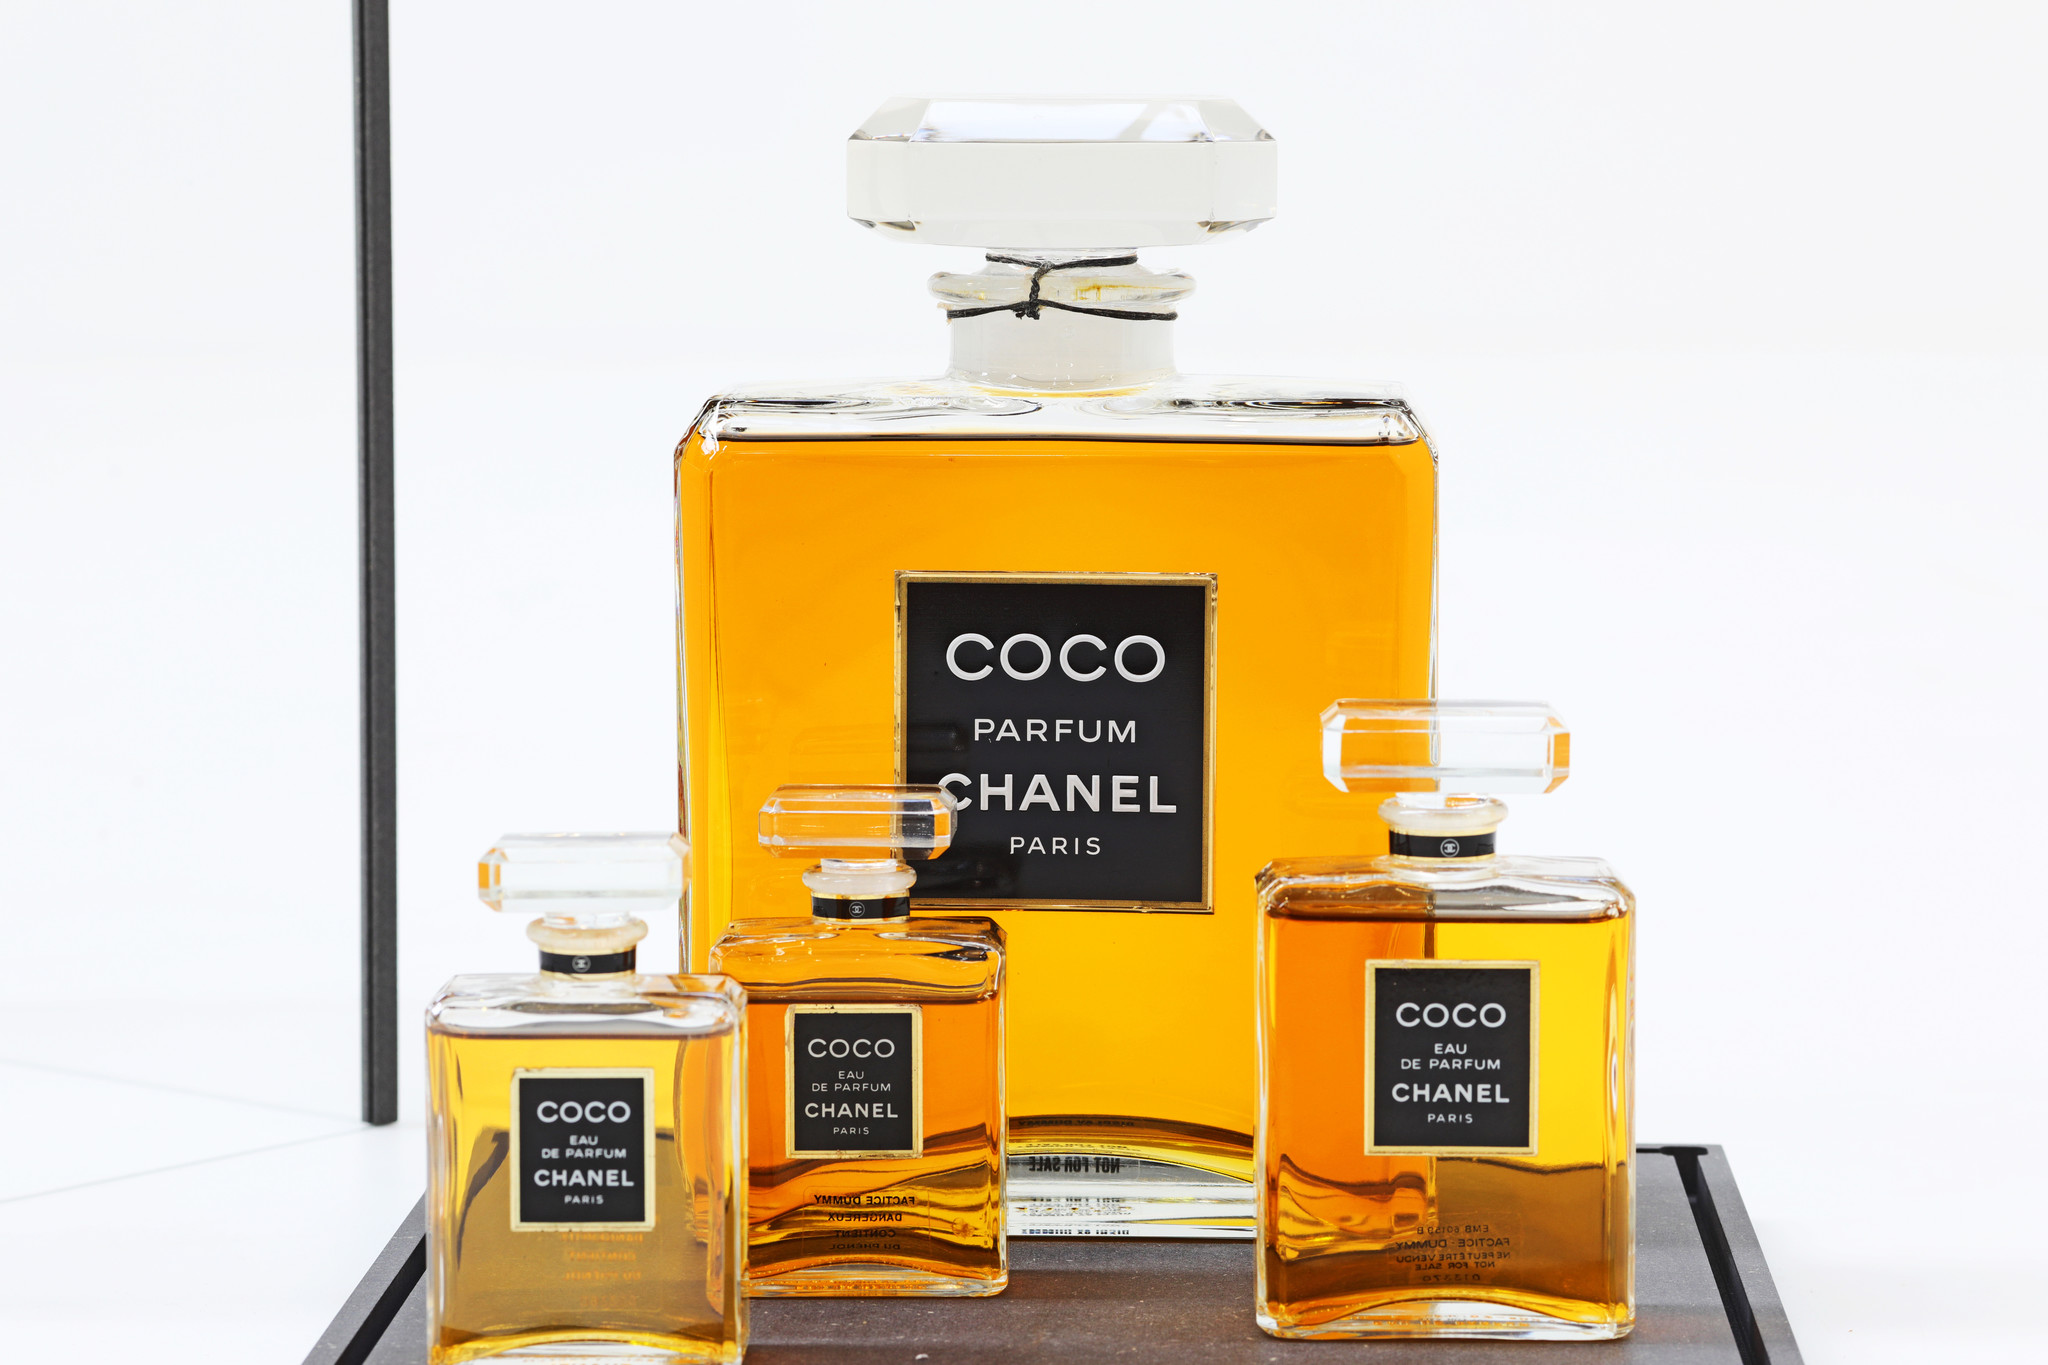 Chanel Coco Collectie flessen in vitrine